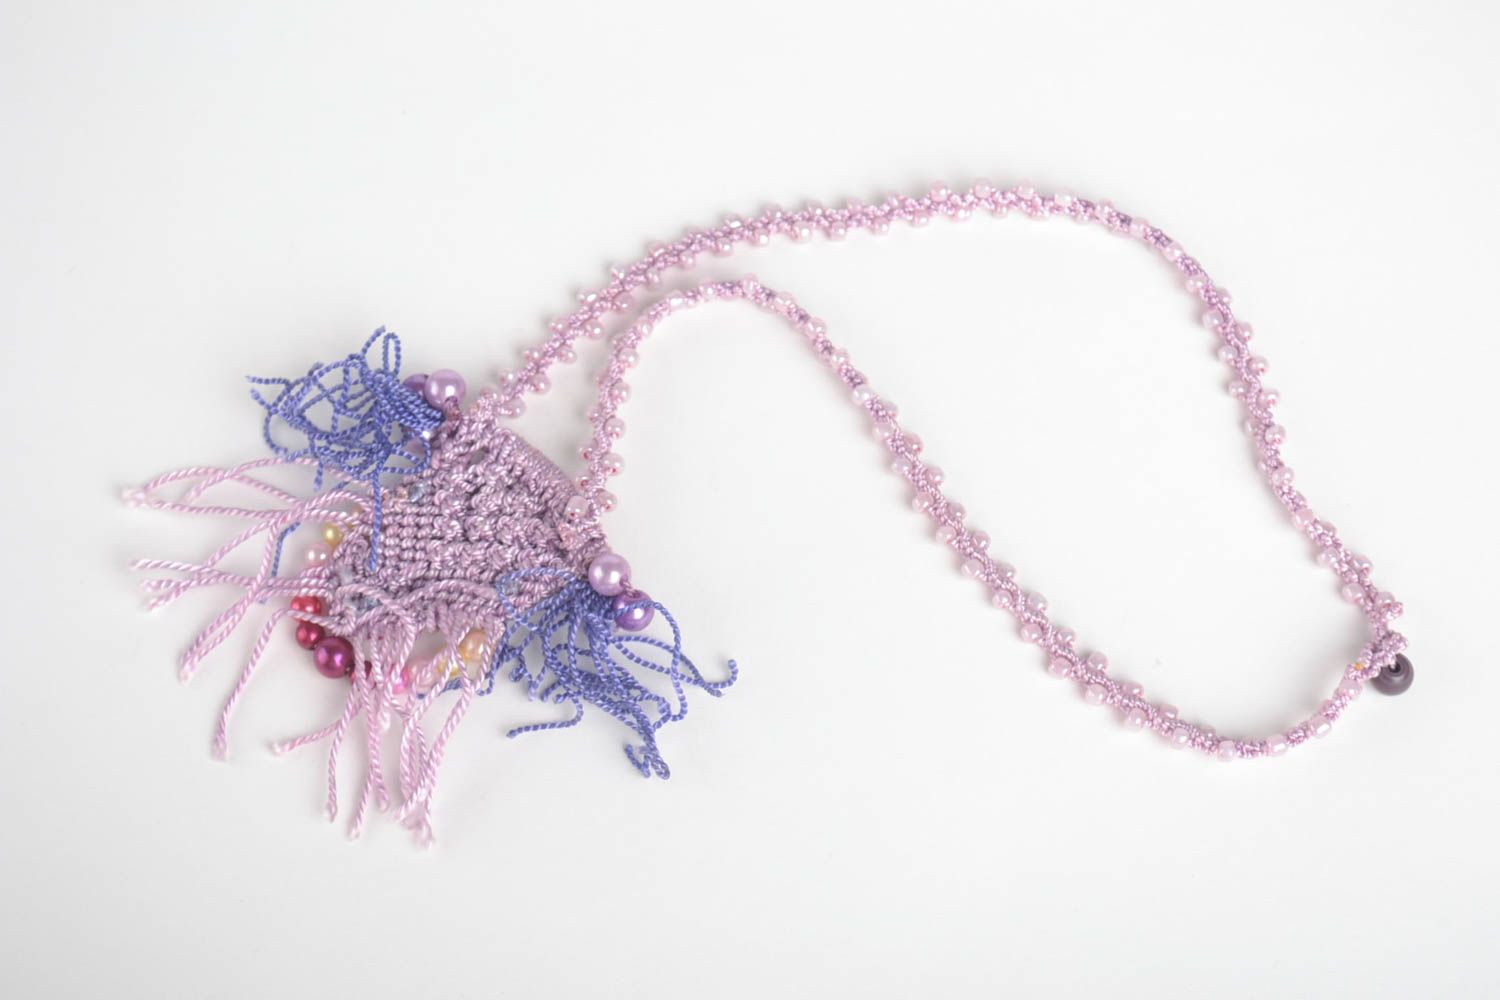 Handmade pendant designer pendant macrame pendant unusual jewelry gift ideas photo 3